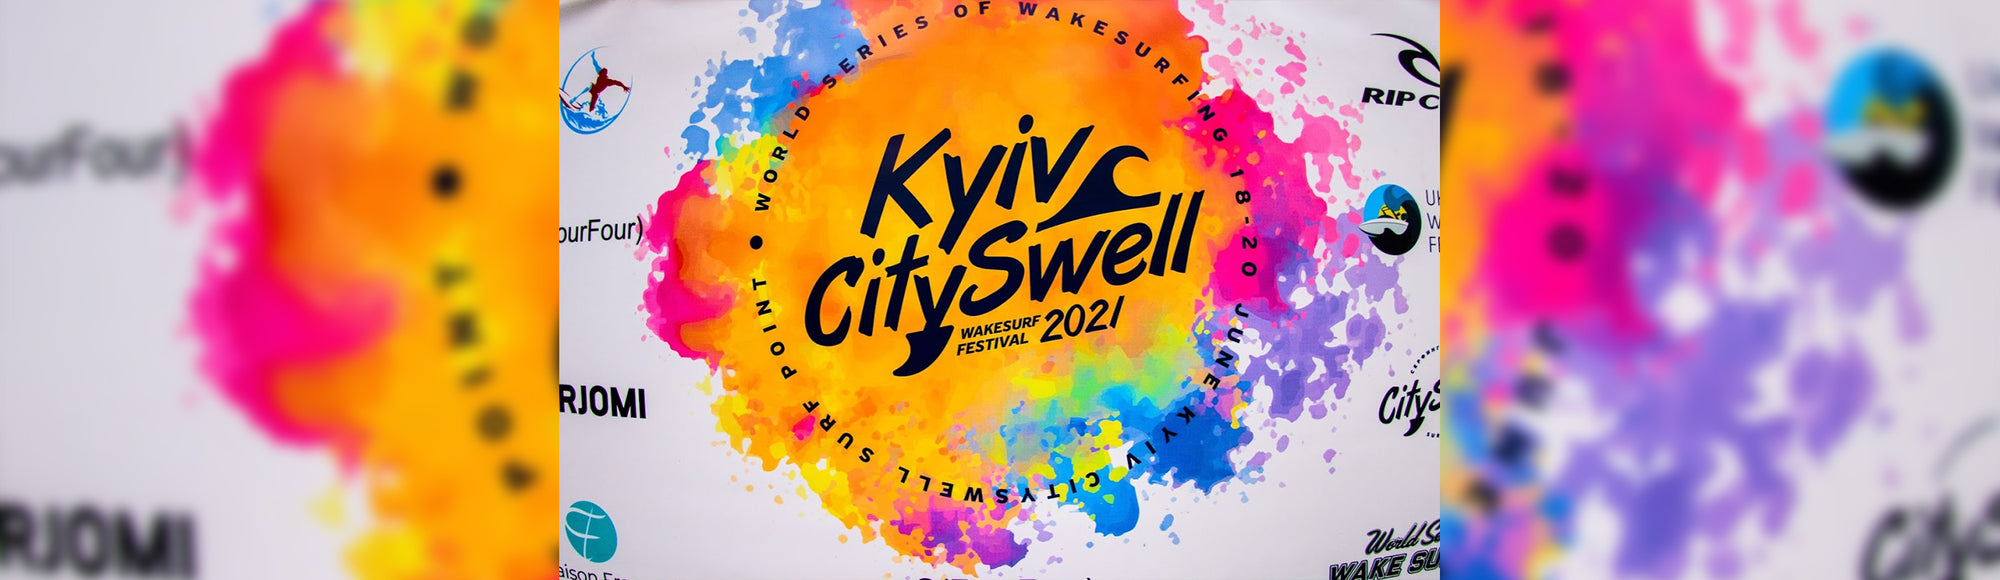 Kyiv City Swell Wakesurf Festival